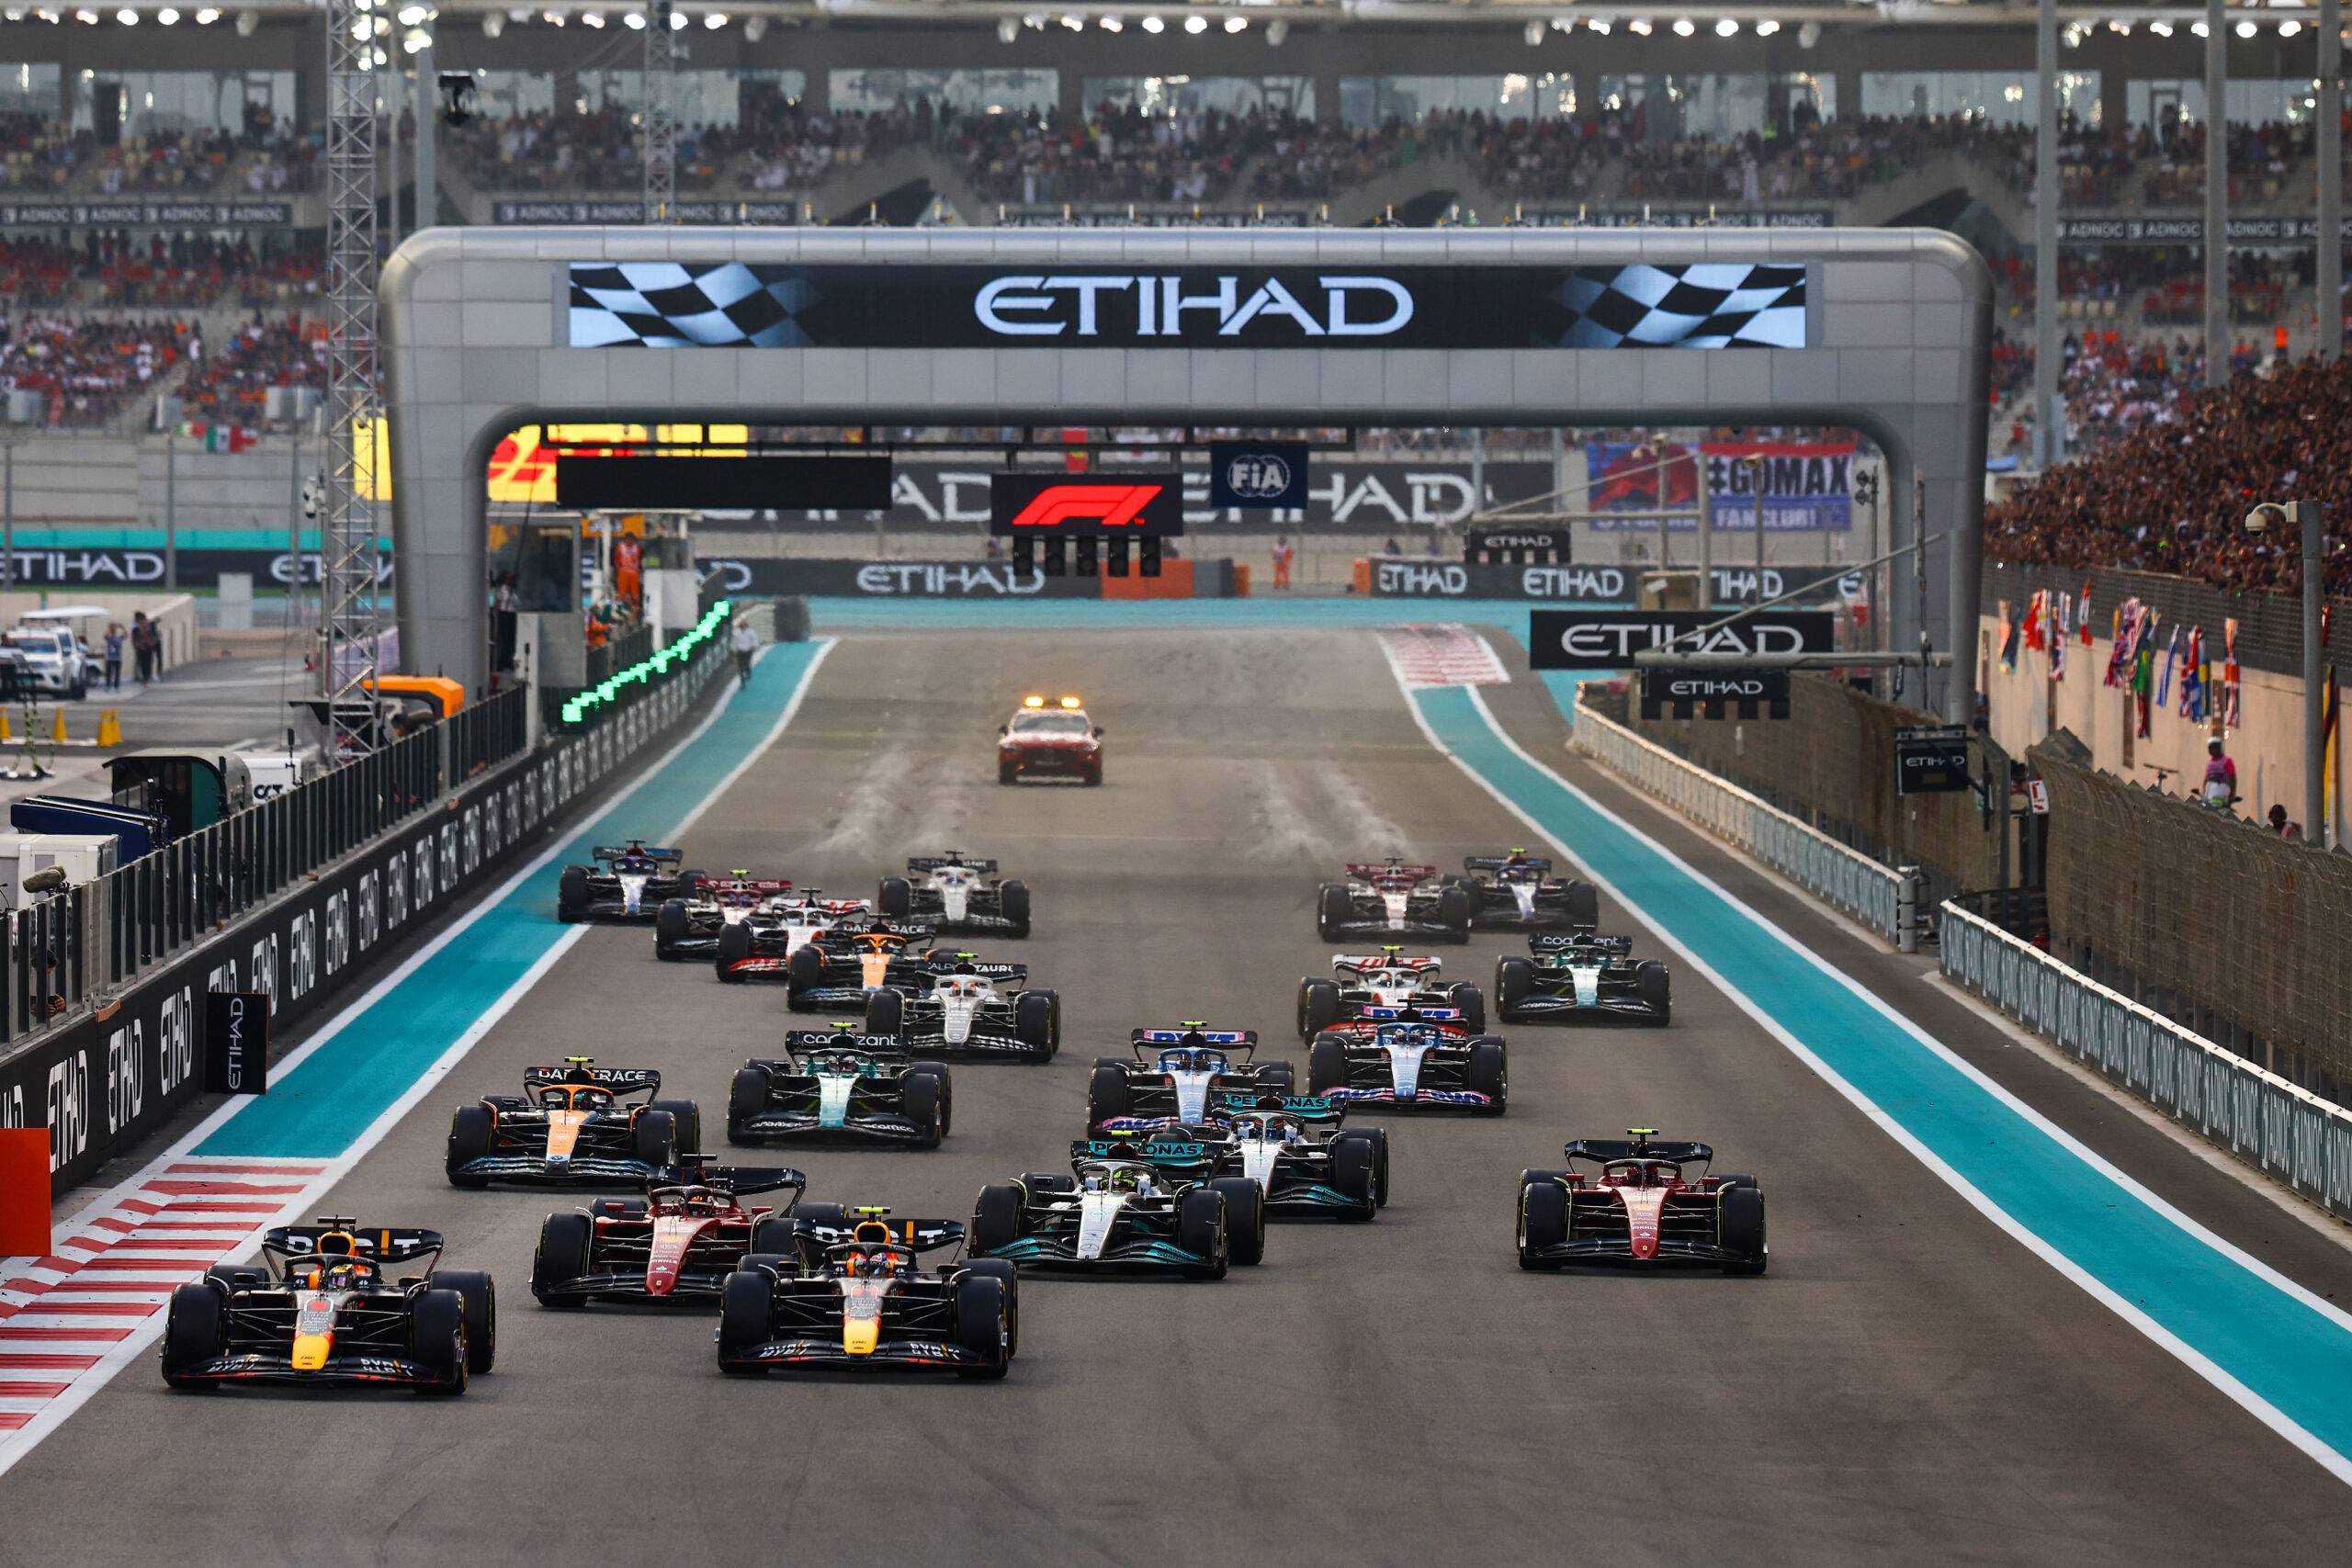 Abu Dhabi GP start